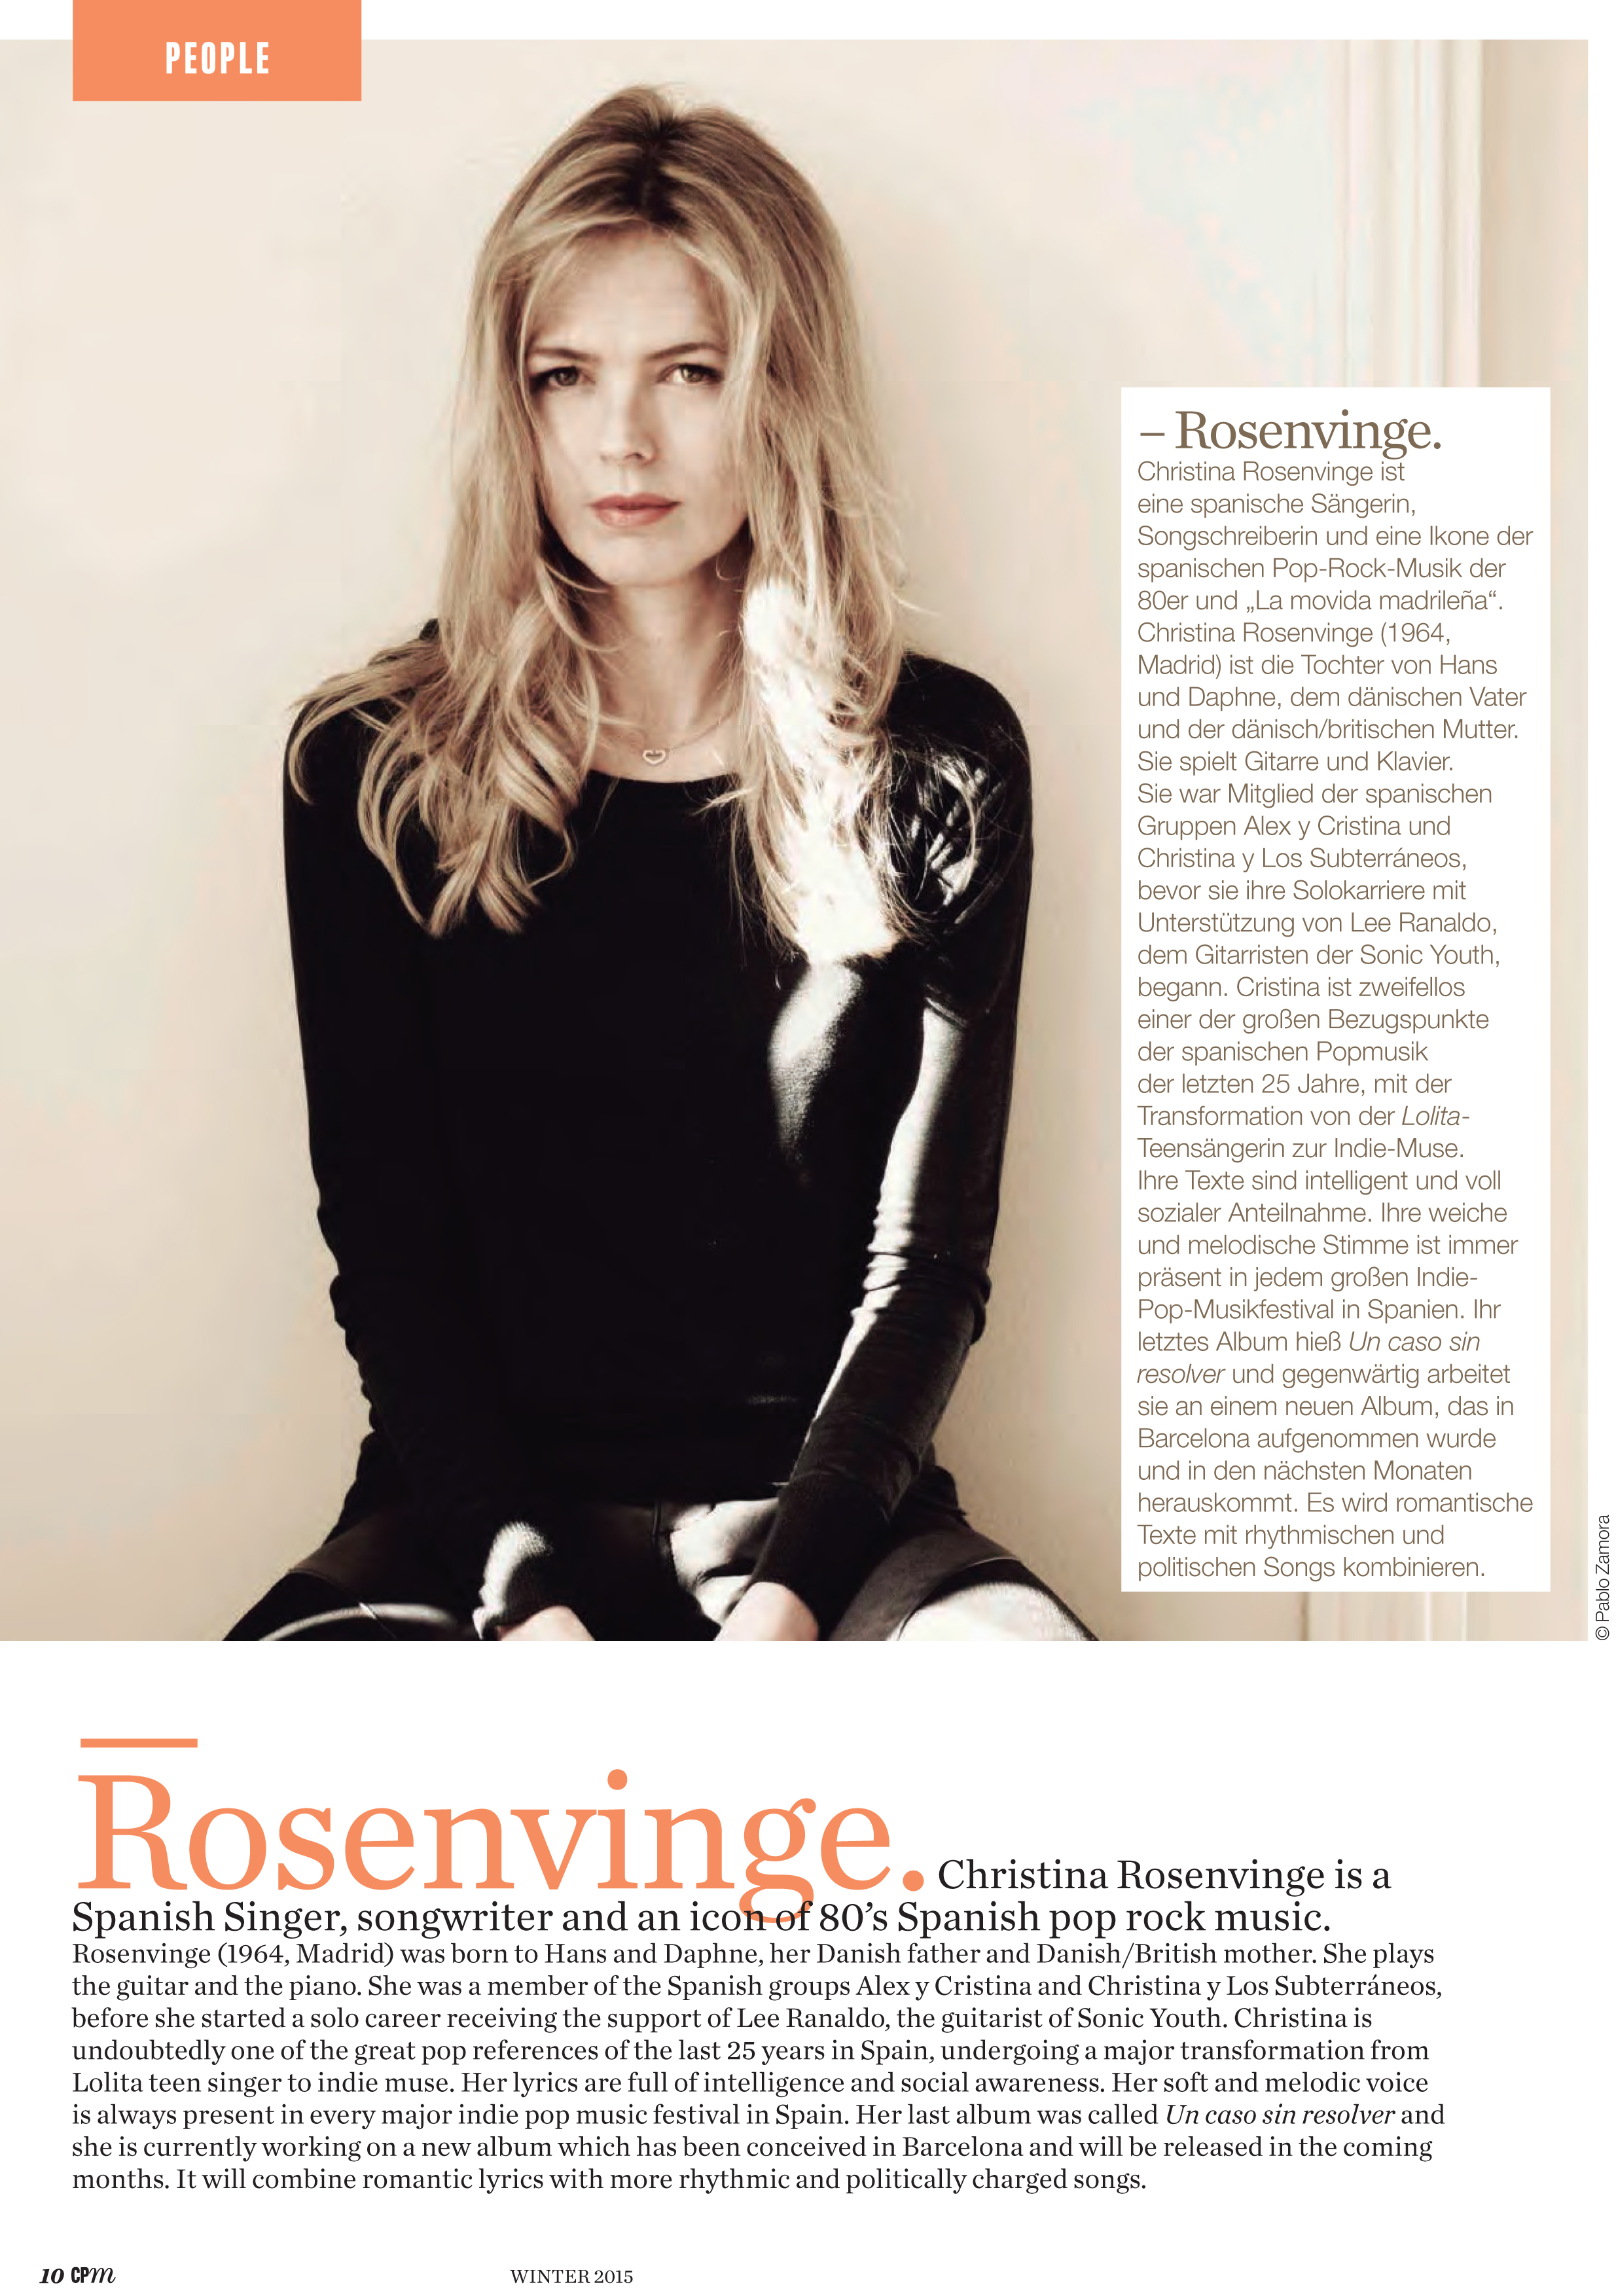 Christina Rosenvinge